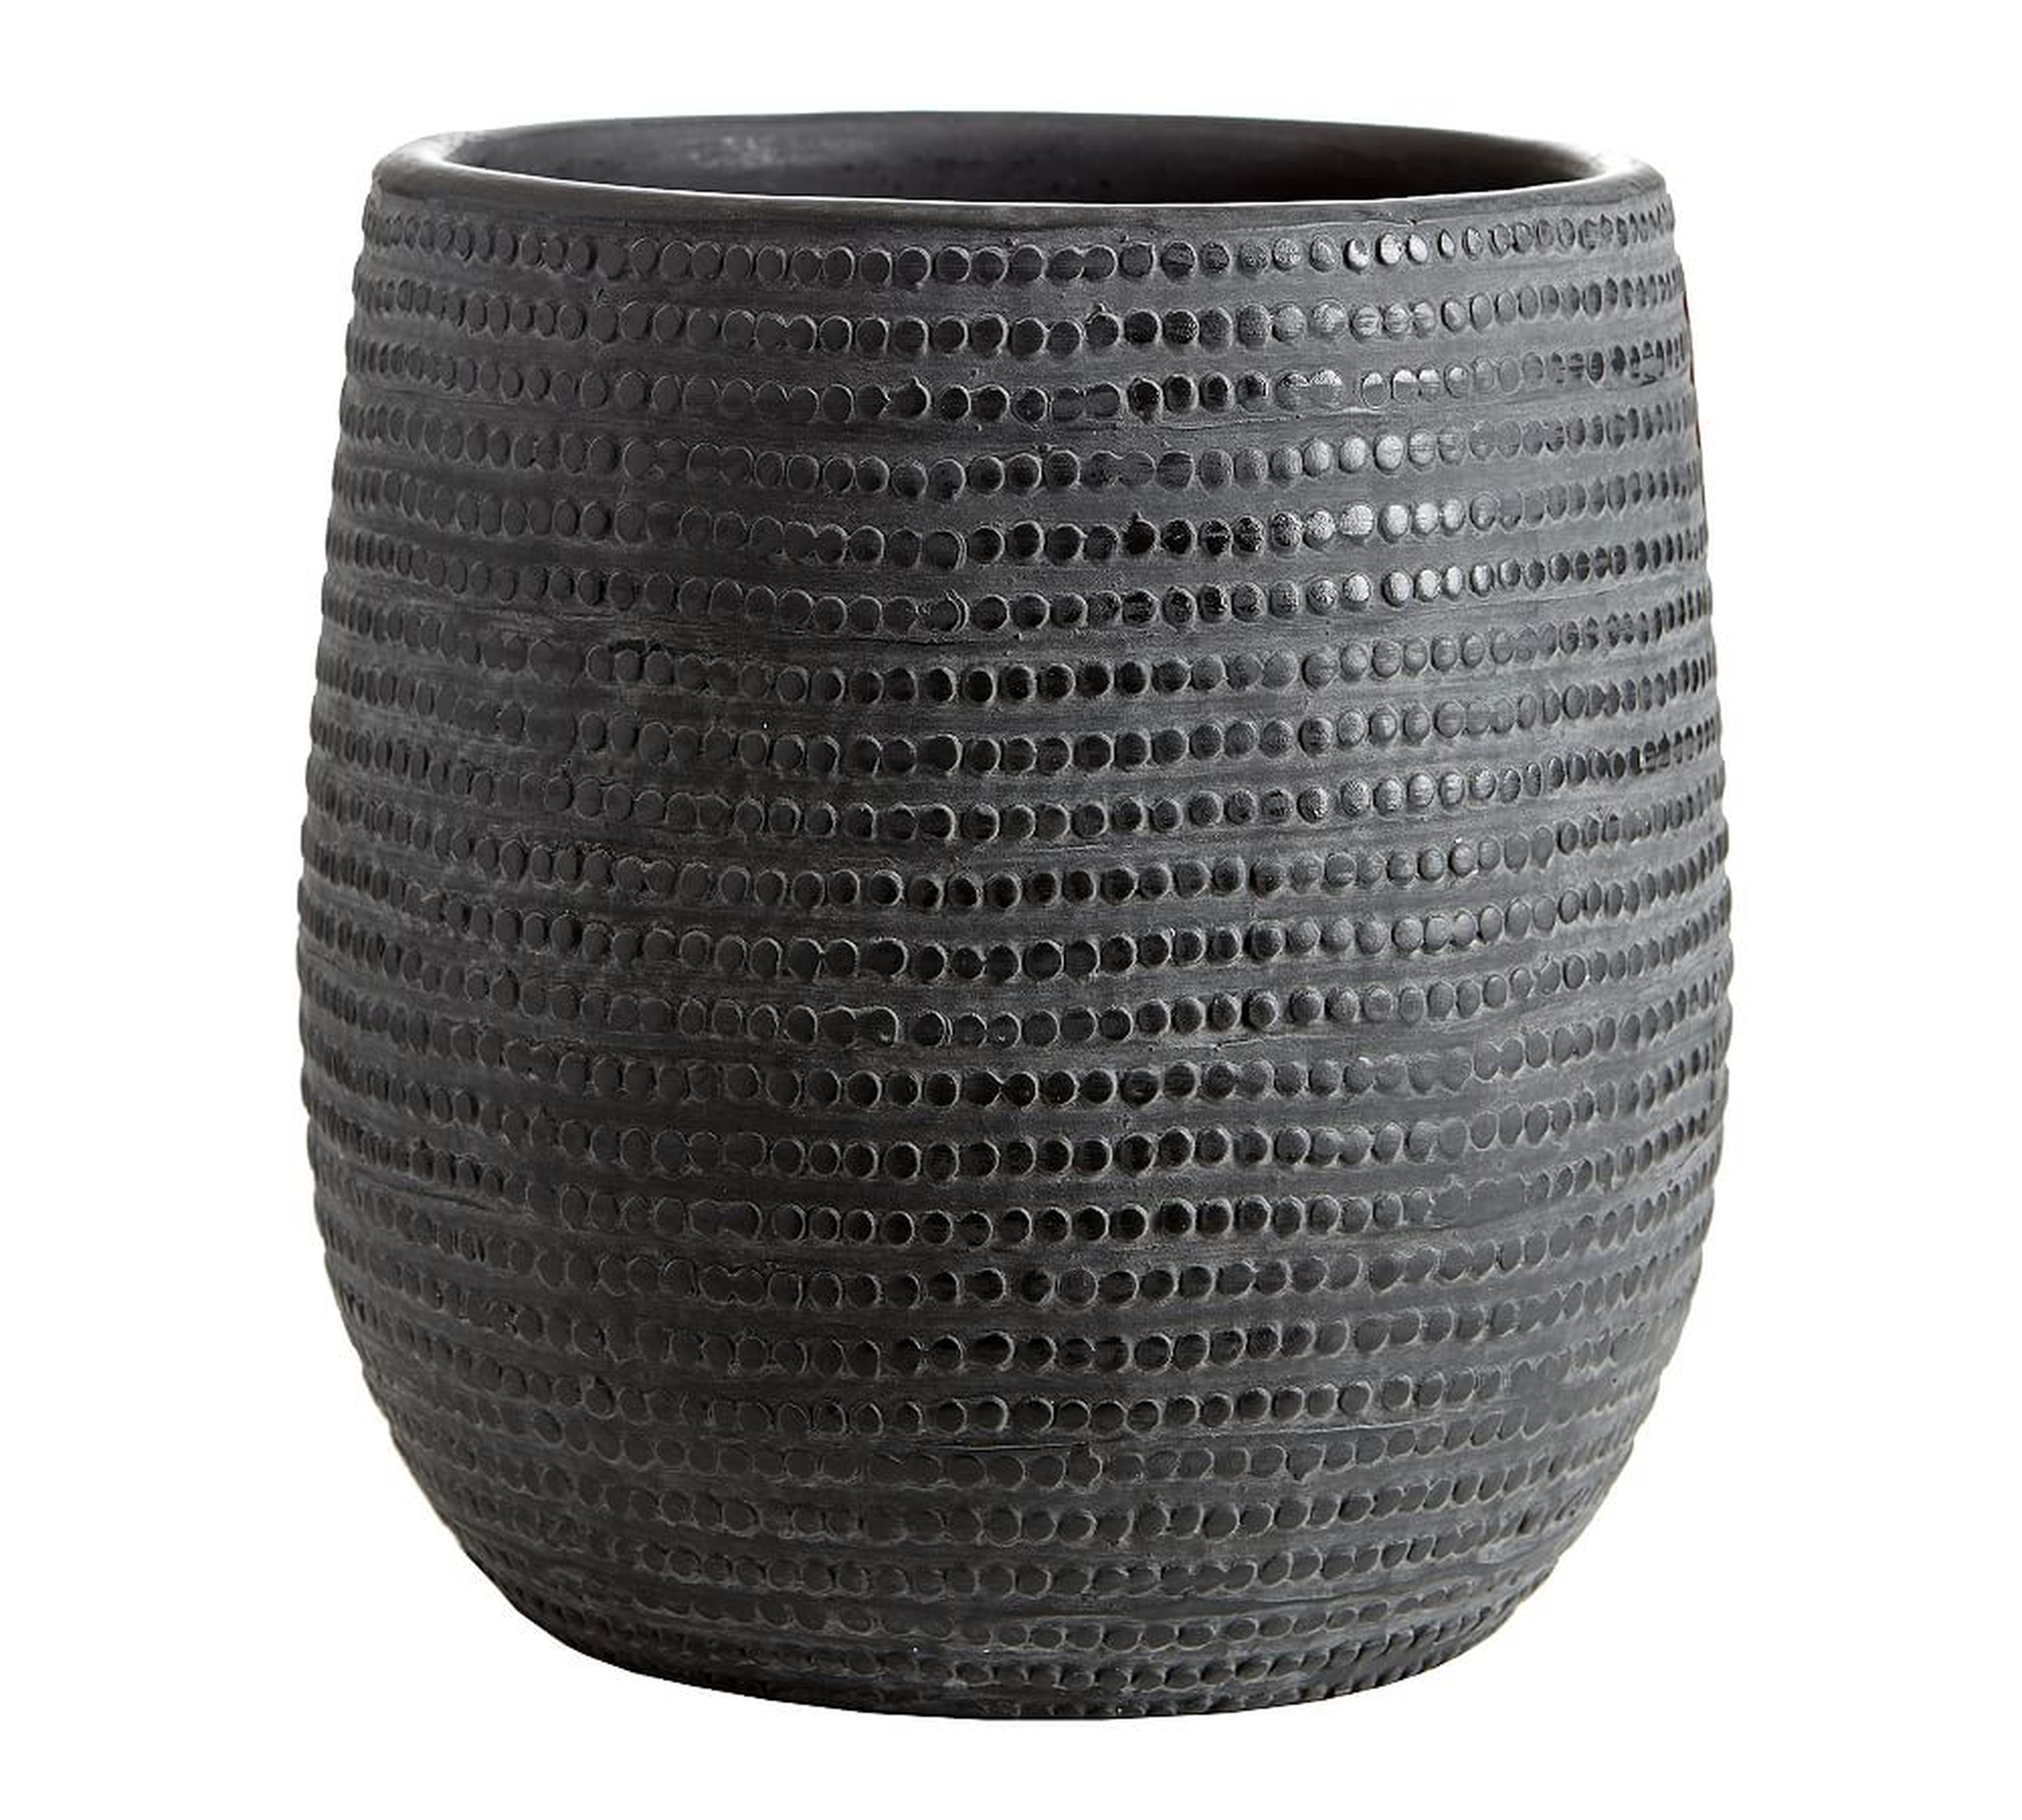 Cosgrove Ceramic Planter, Medium - Charcoal - Pottery Barn